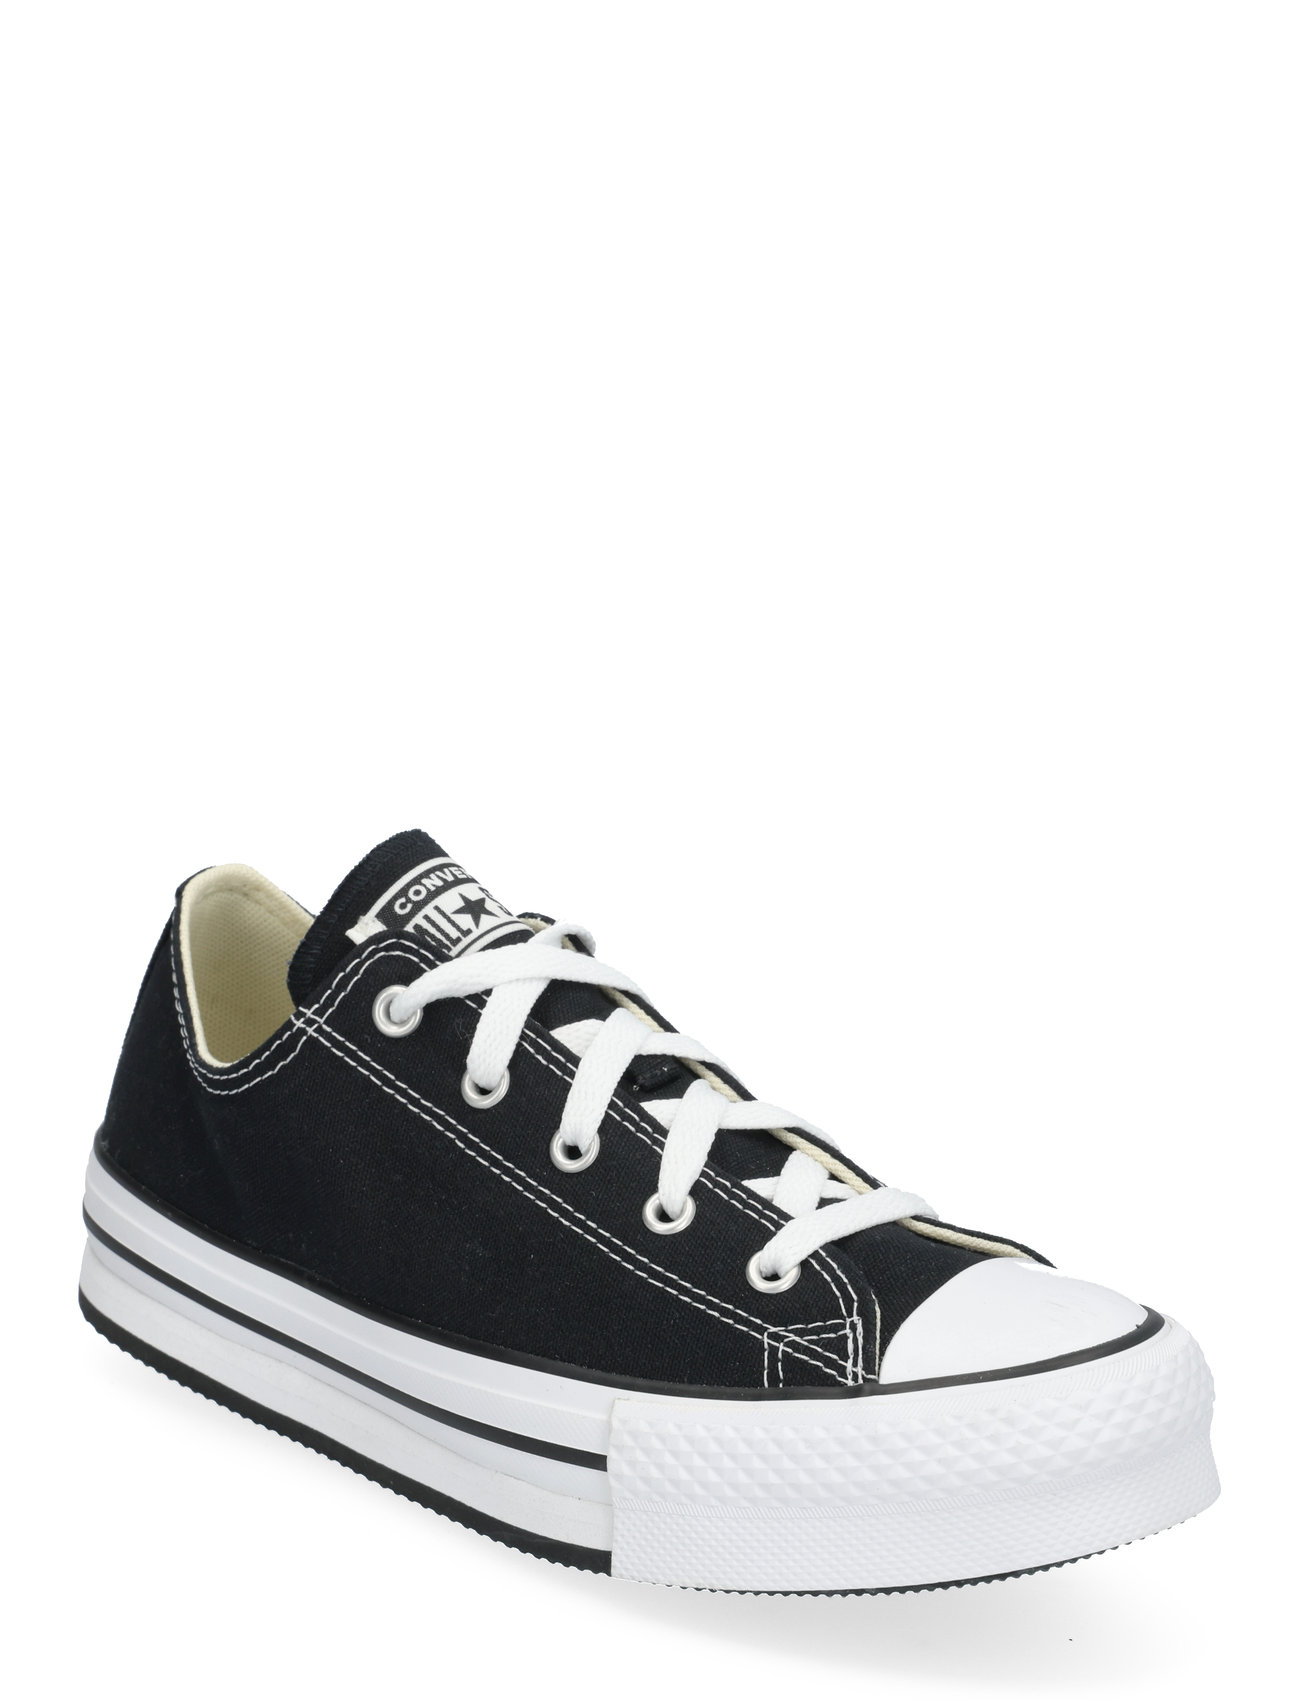 Ctas Eva Lift Ox Black/White/Black Low-top Sneakers Black Converse